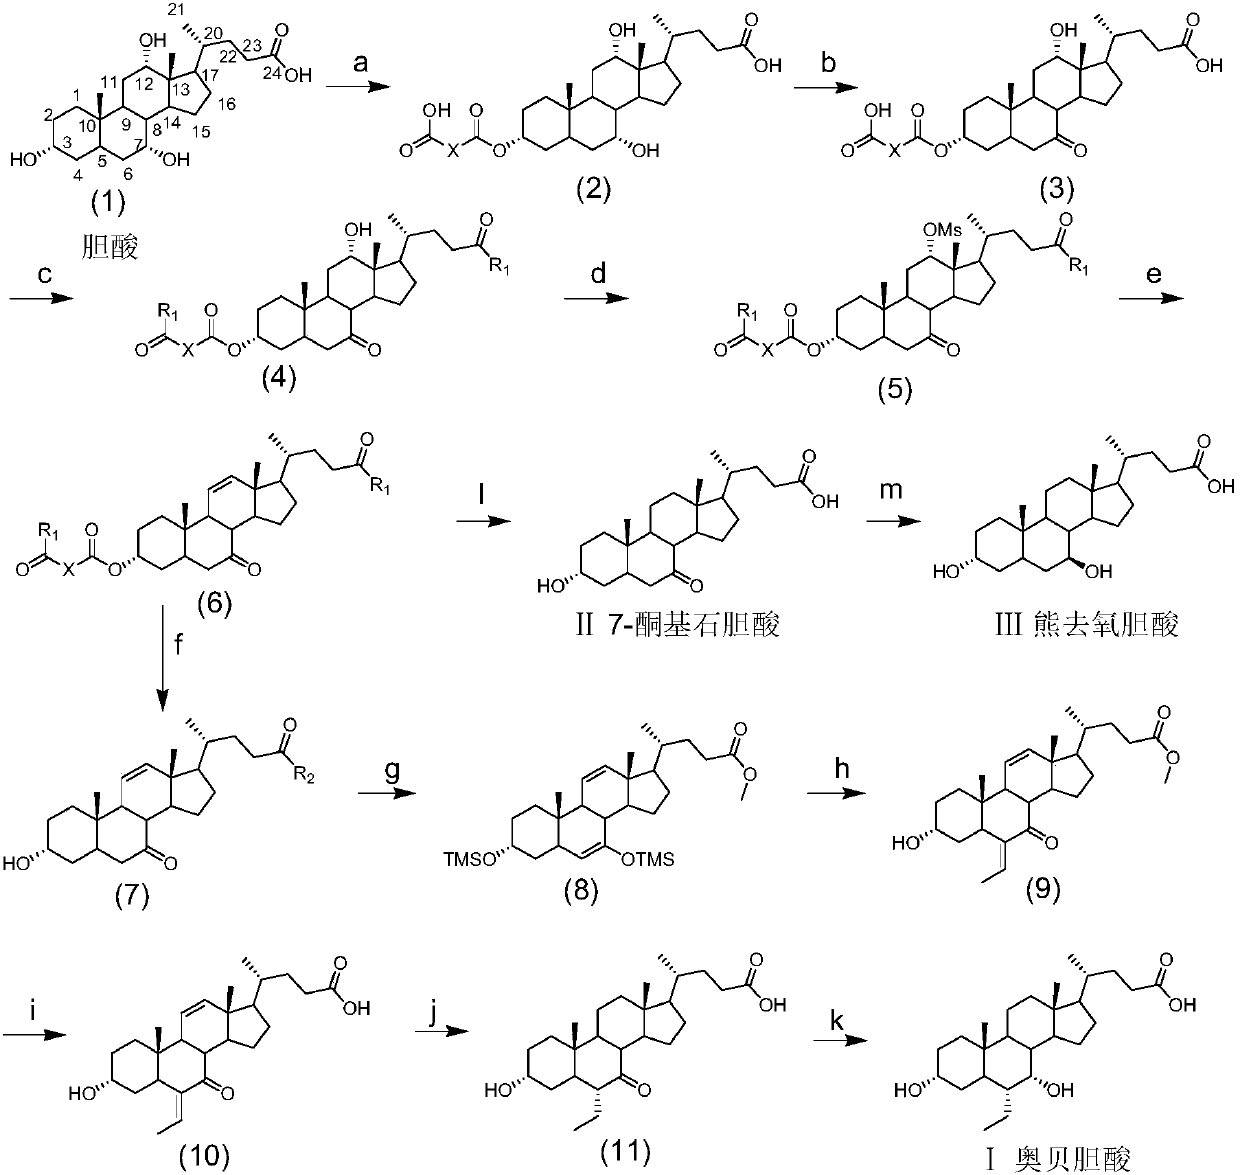 Method for preparing obeticholic acid, ursodeoxycholic acid and 7-ketolithocholicacid